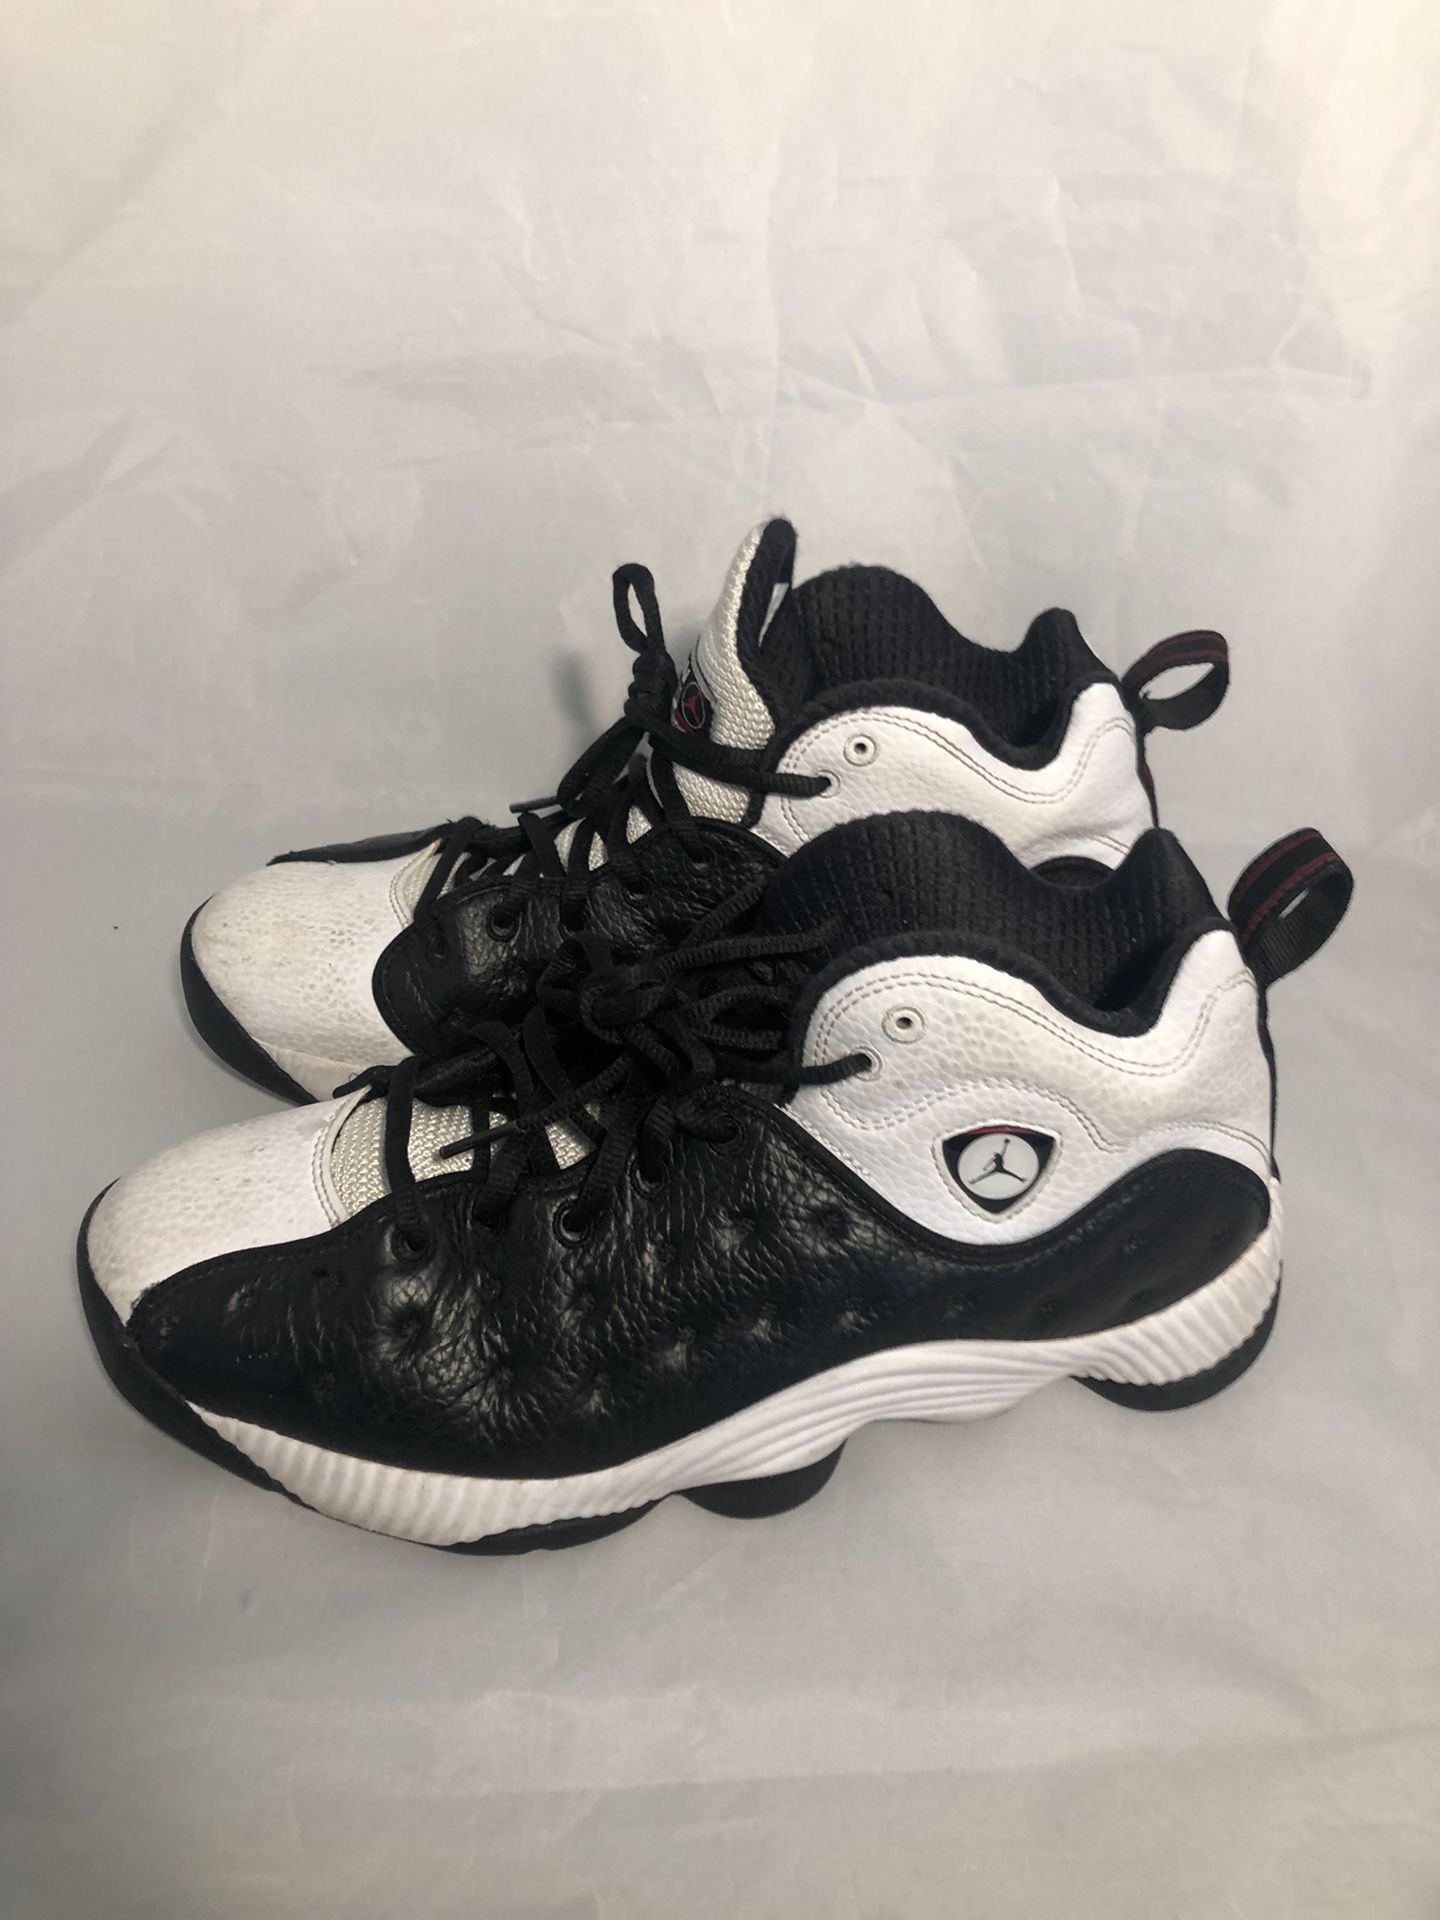 Jordan Jumpman Team II Mens 819175-010 Black White Basketball Shoes Size 9